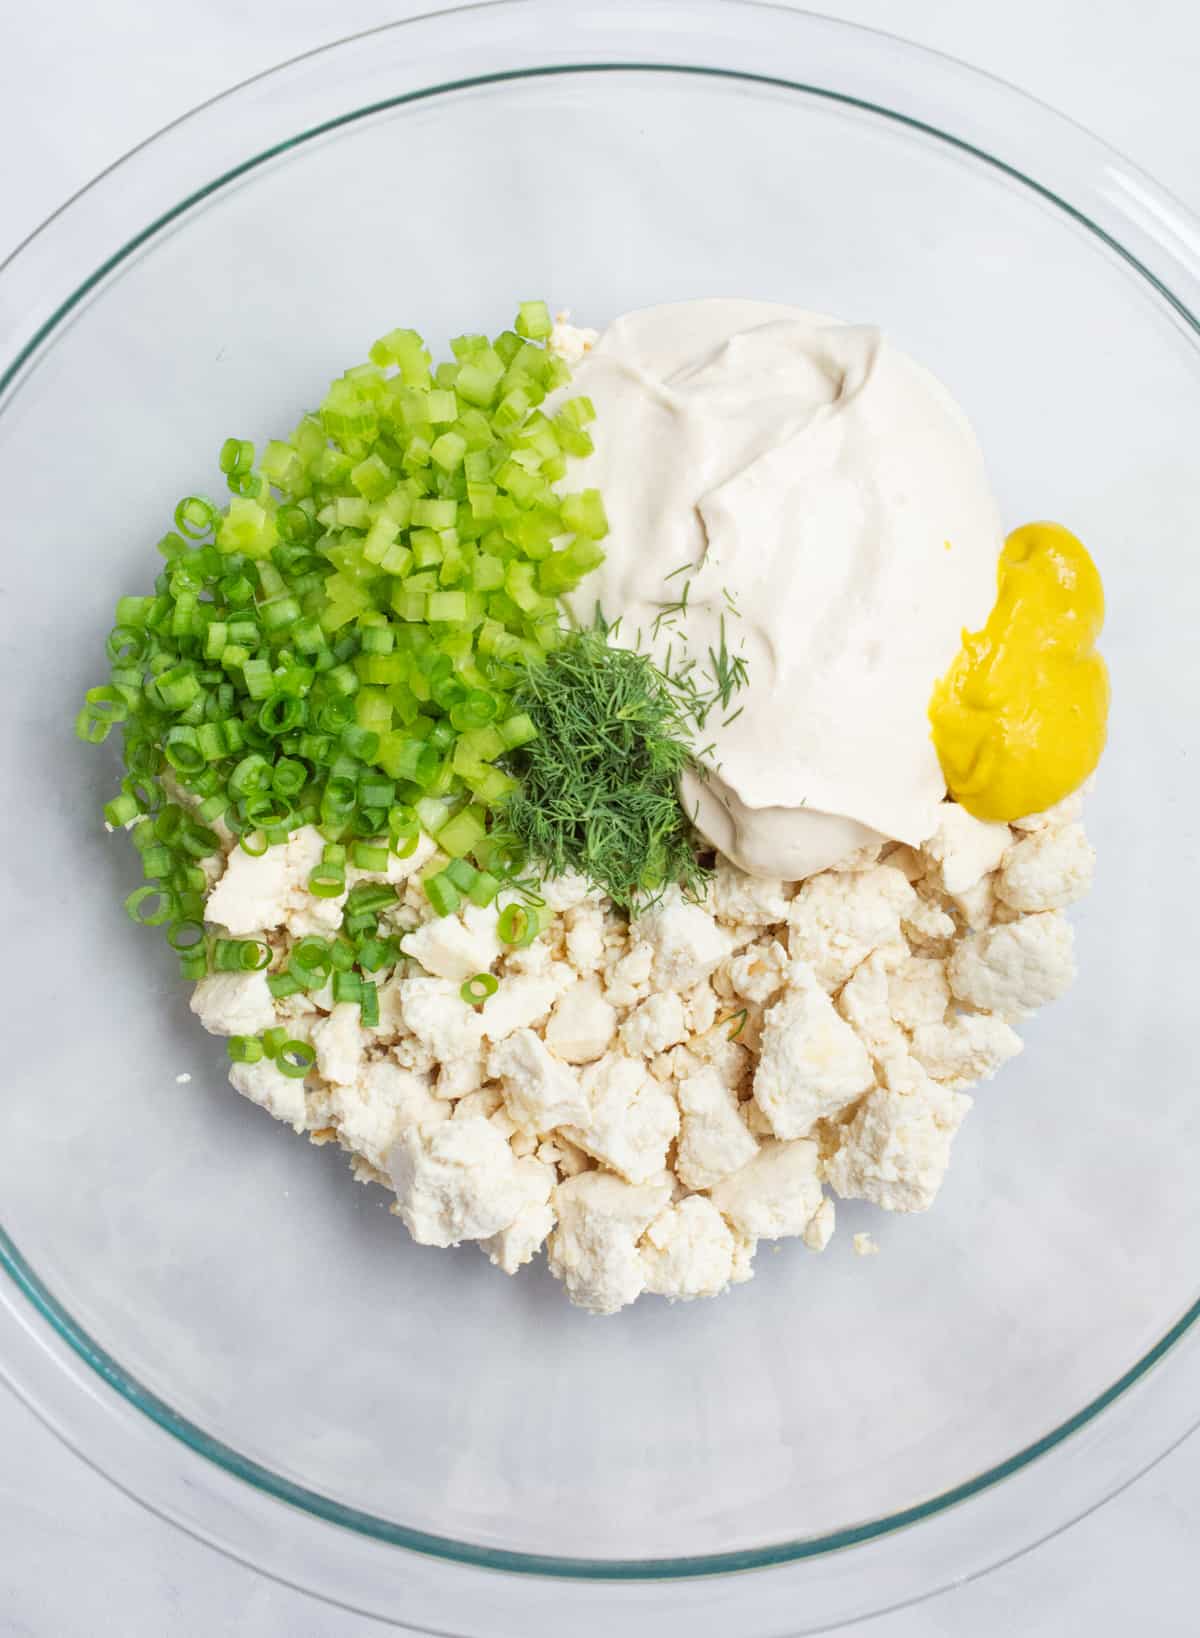 Vegan egg salad ingredients before mixing.